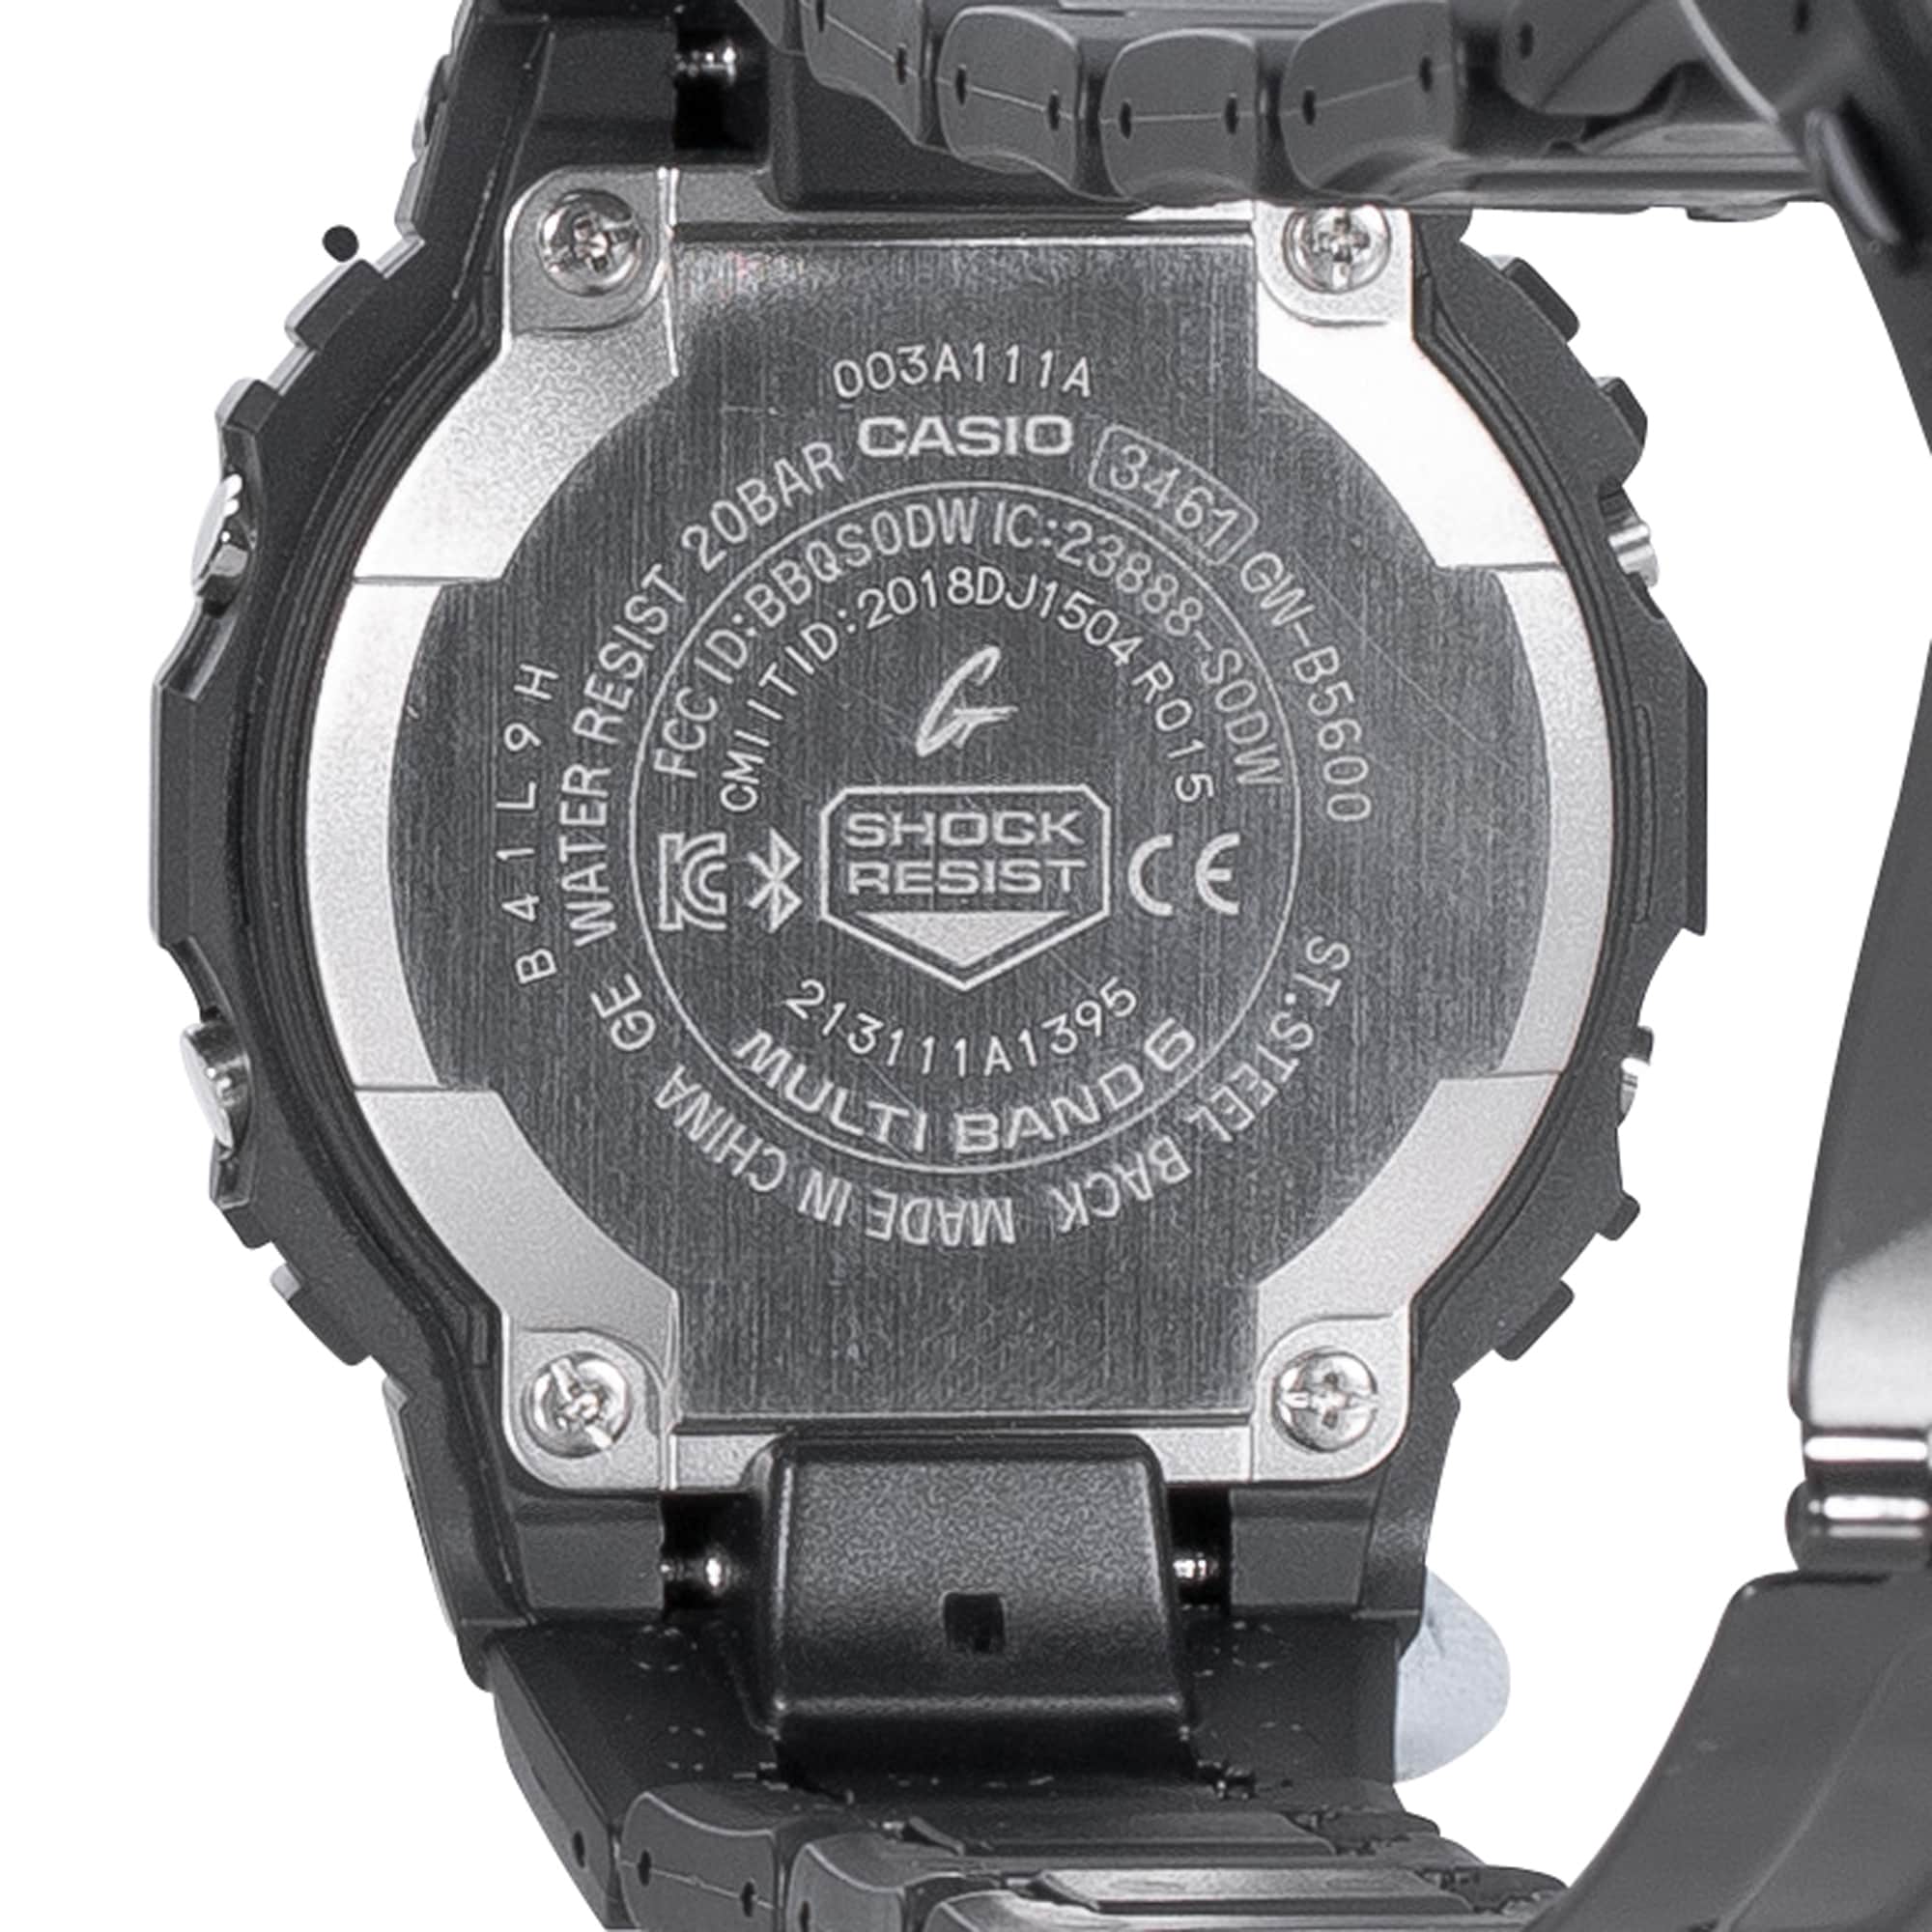 Origin blac Casio the Purchase GW-B5600BC-1BER G-Shock Watch The